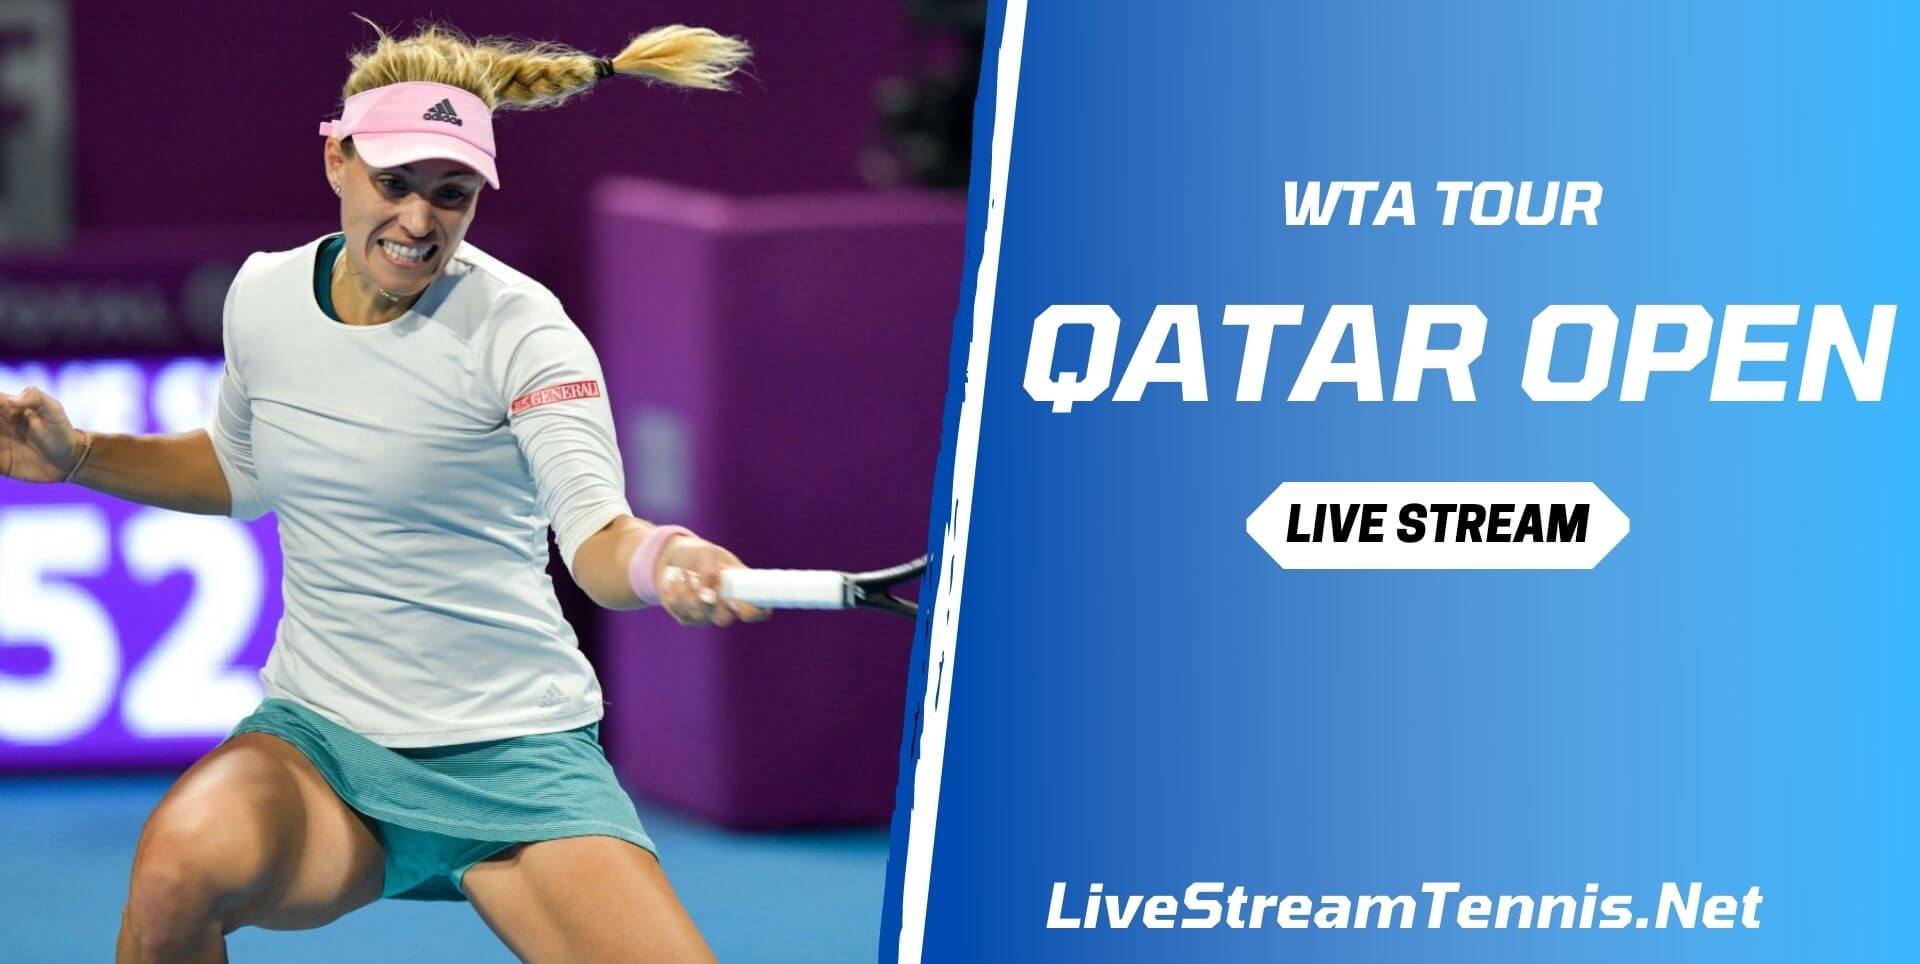 qatar-open-tennis-live-stream-wta-tour